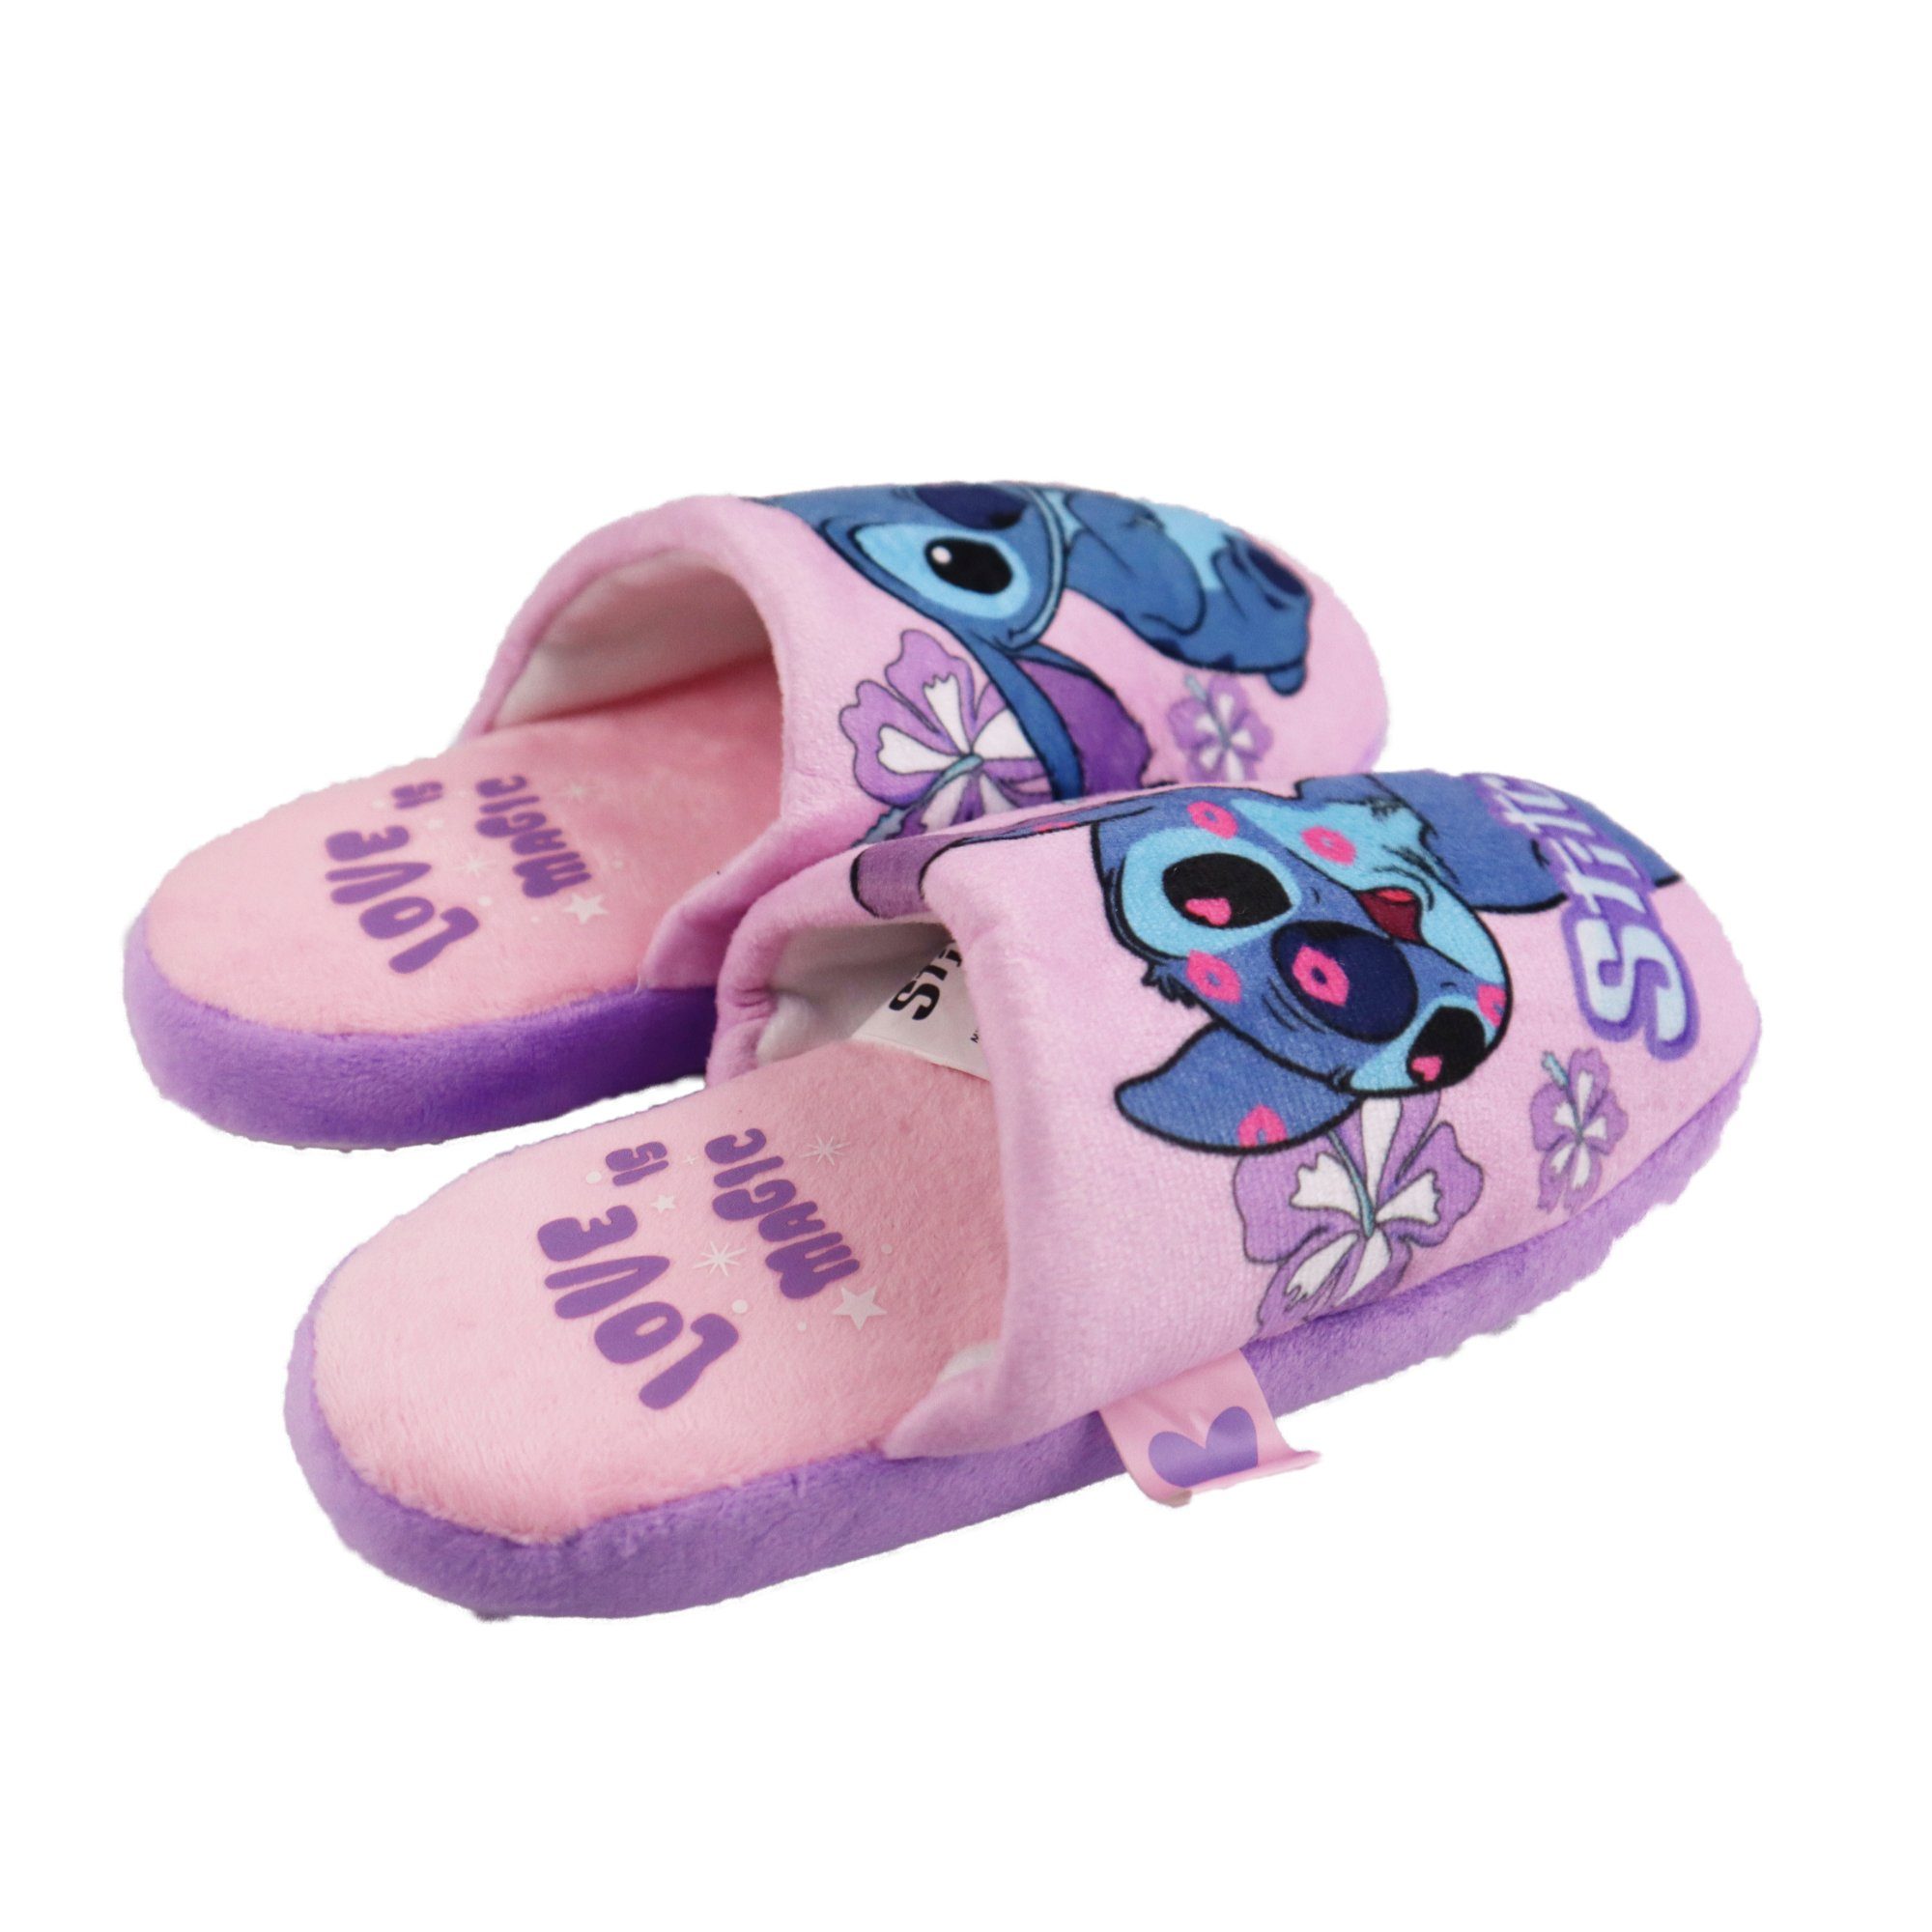 Disney Disney Stitch Kinder Mädchen 35 Hausschuhe 28 Schlüpfschuhe Slipper - Gr. Pantoffel